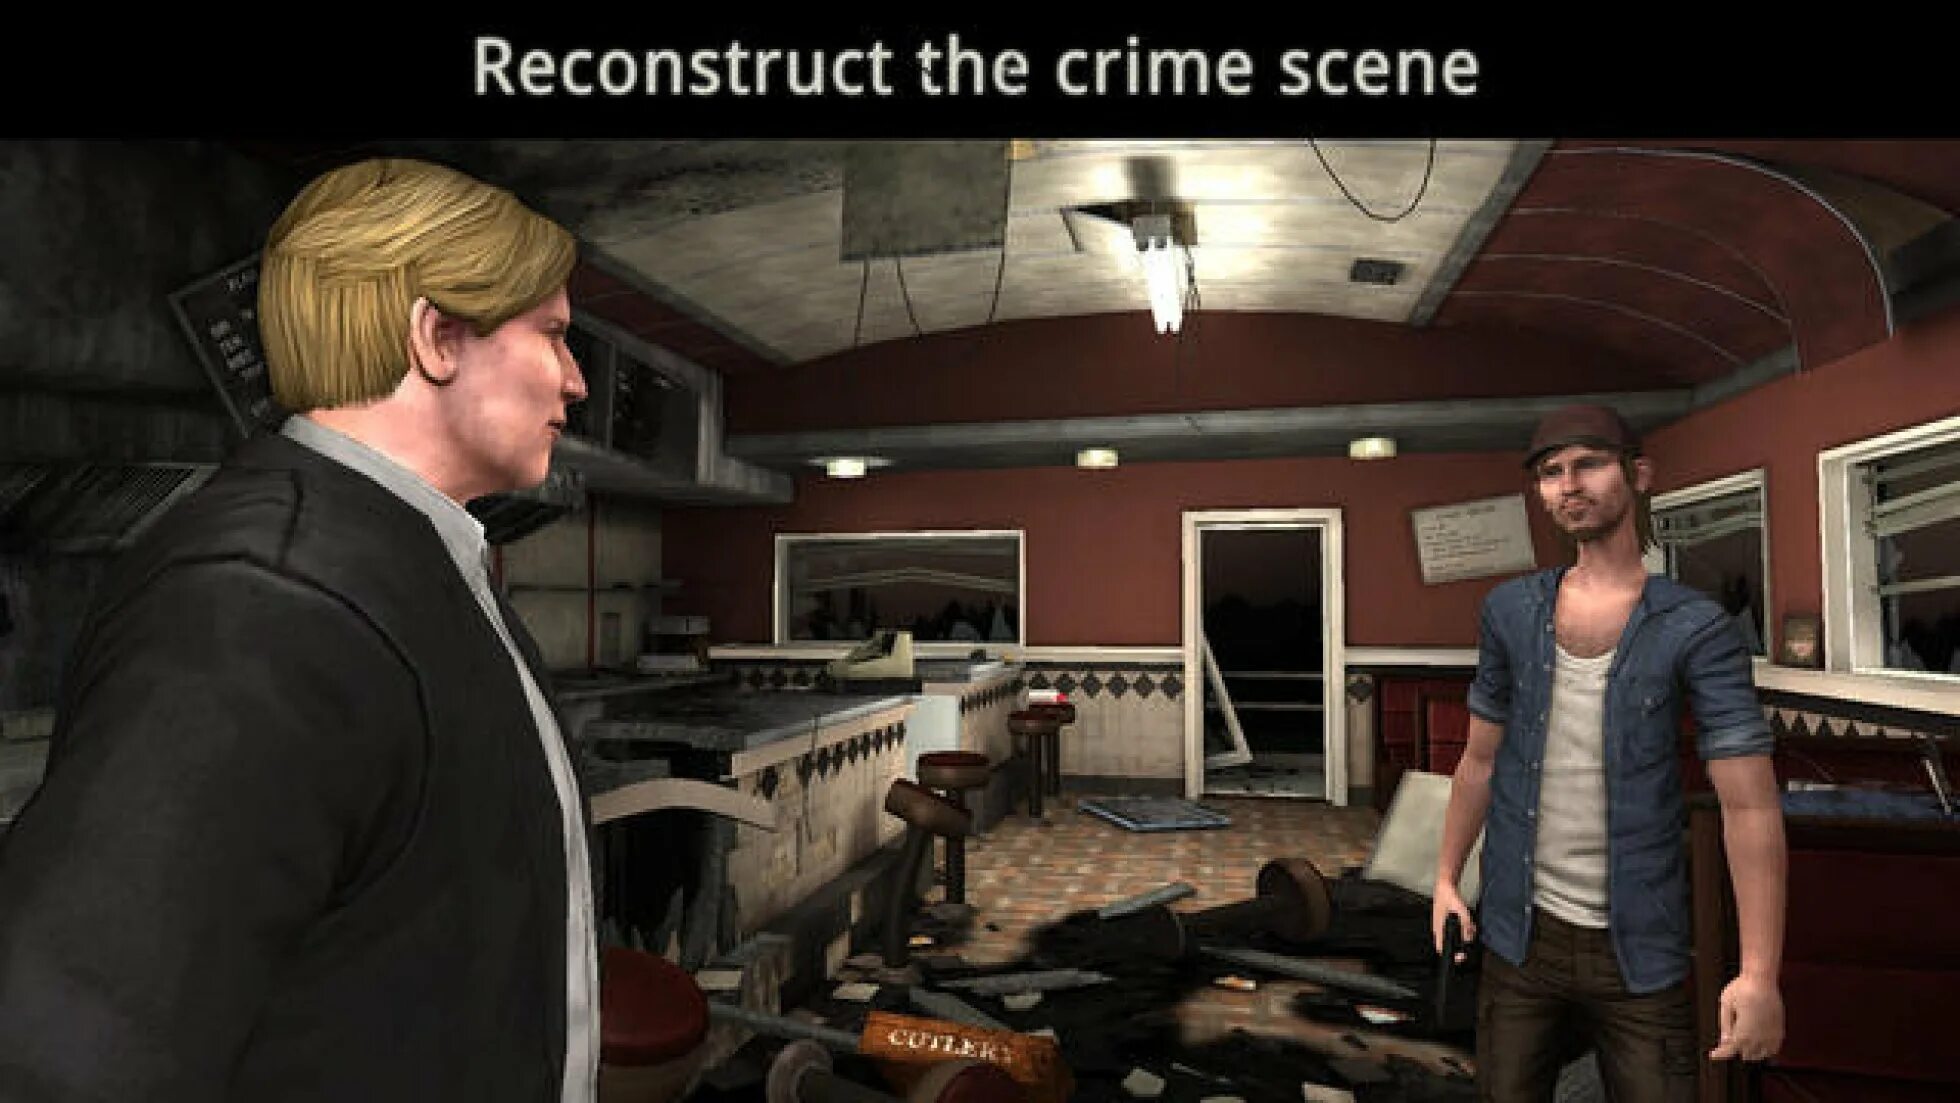 Trace игра. Игра расследование преступлений. Игра про расследование убийств. Игра за детектива.